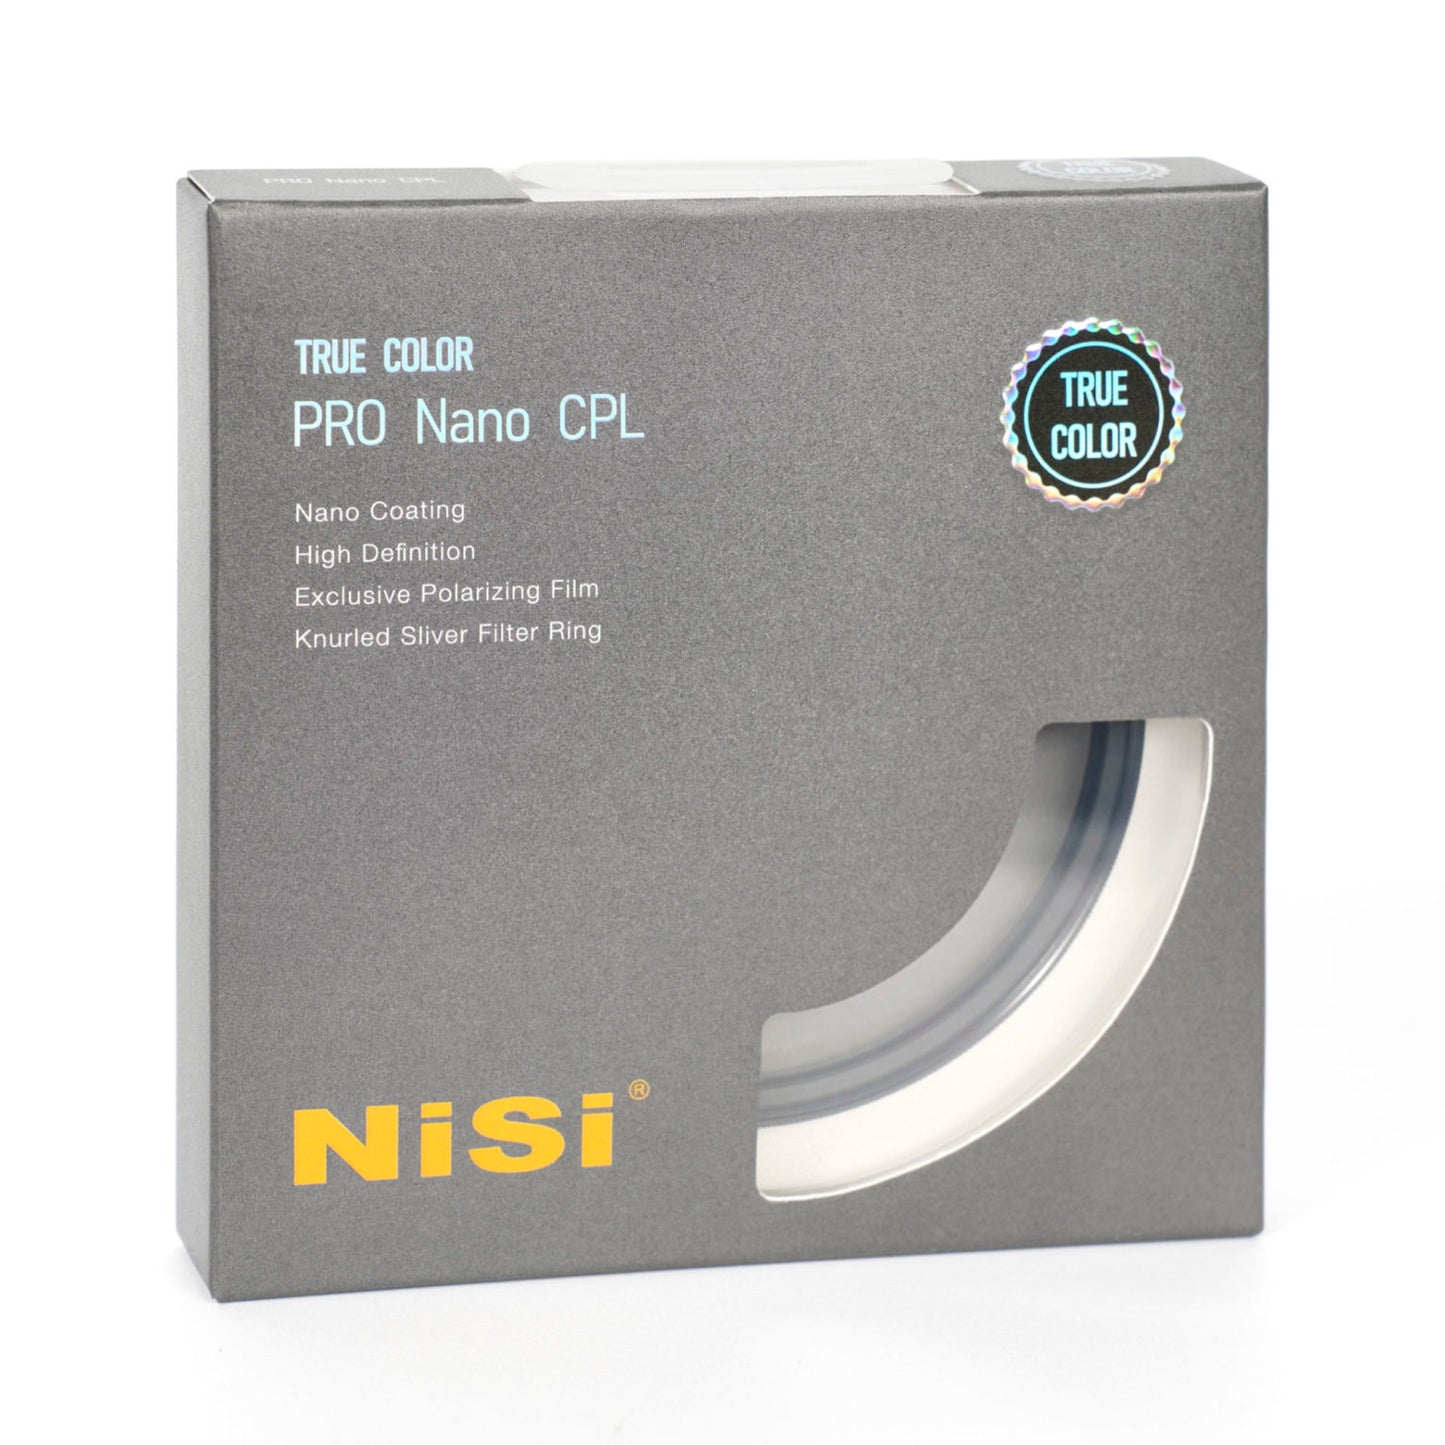 NiSi 52mm True Color Pro Nano CPL Circular Polarizing Filter